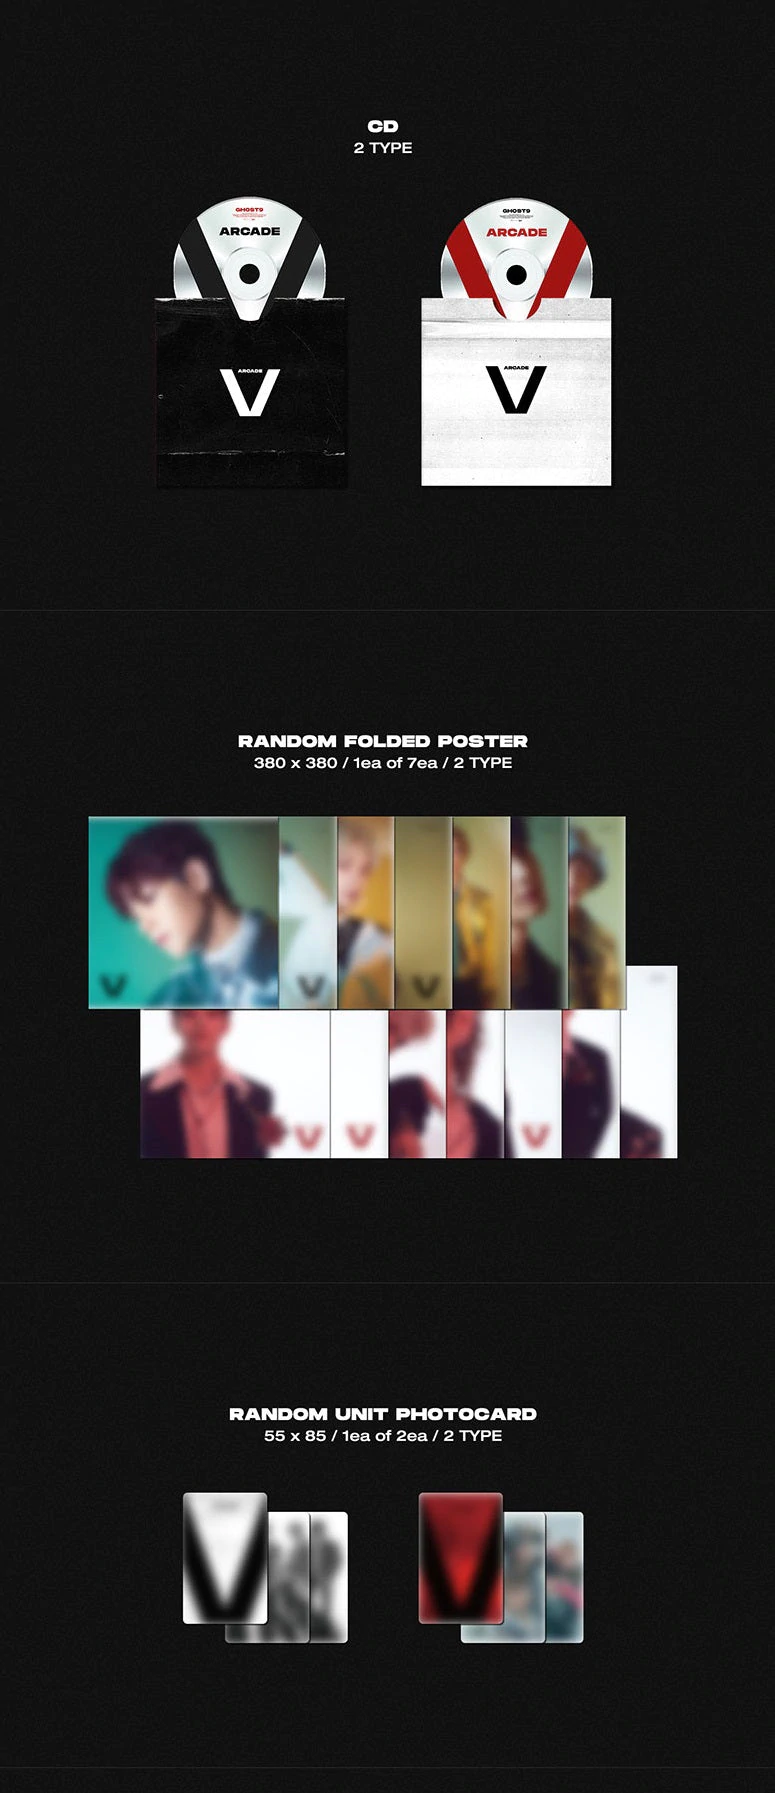 GHOST9 Mini Album Vol. 6 - ARCADE : V